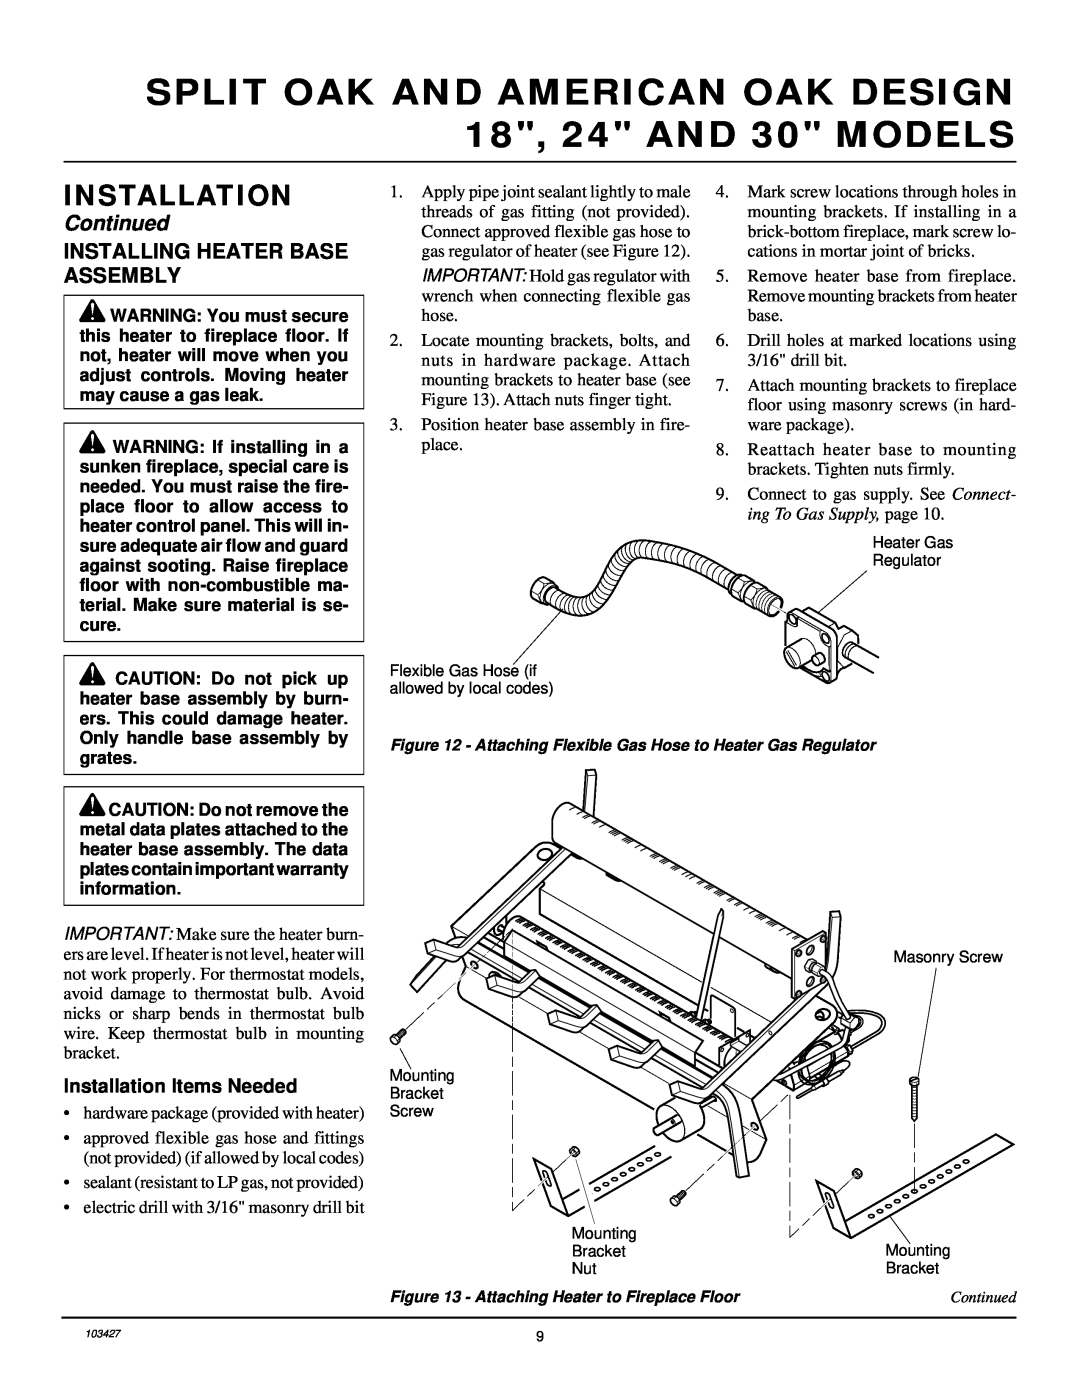 Desa Unvented Propane Gas Log Heater Model Split Oak and American Oak Design Installing Heater Base Assembly, Installation 